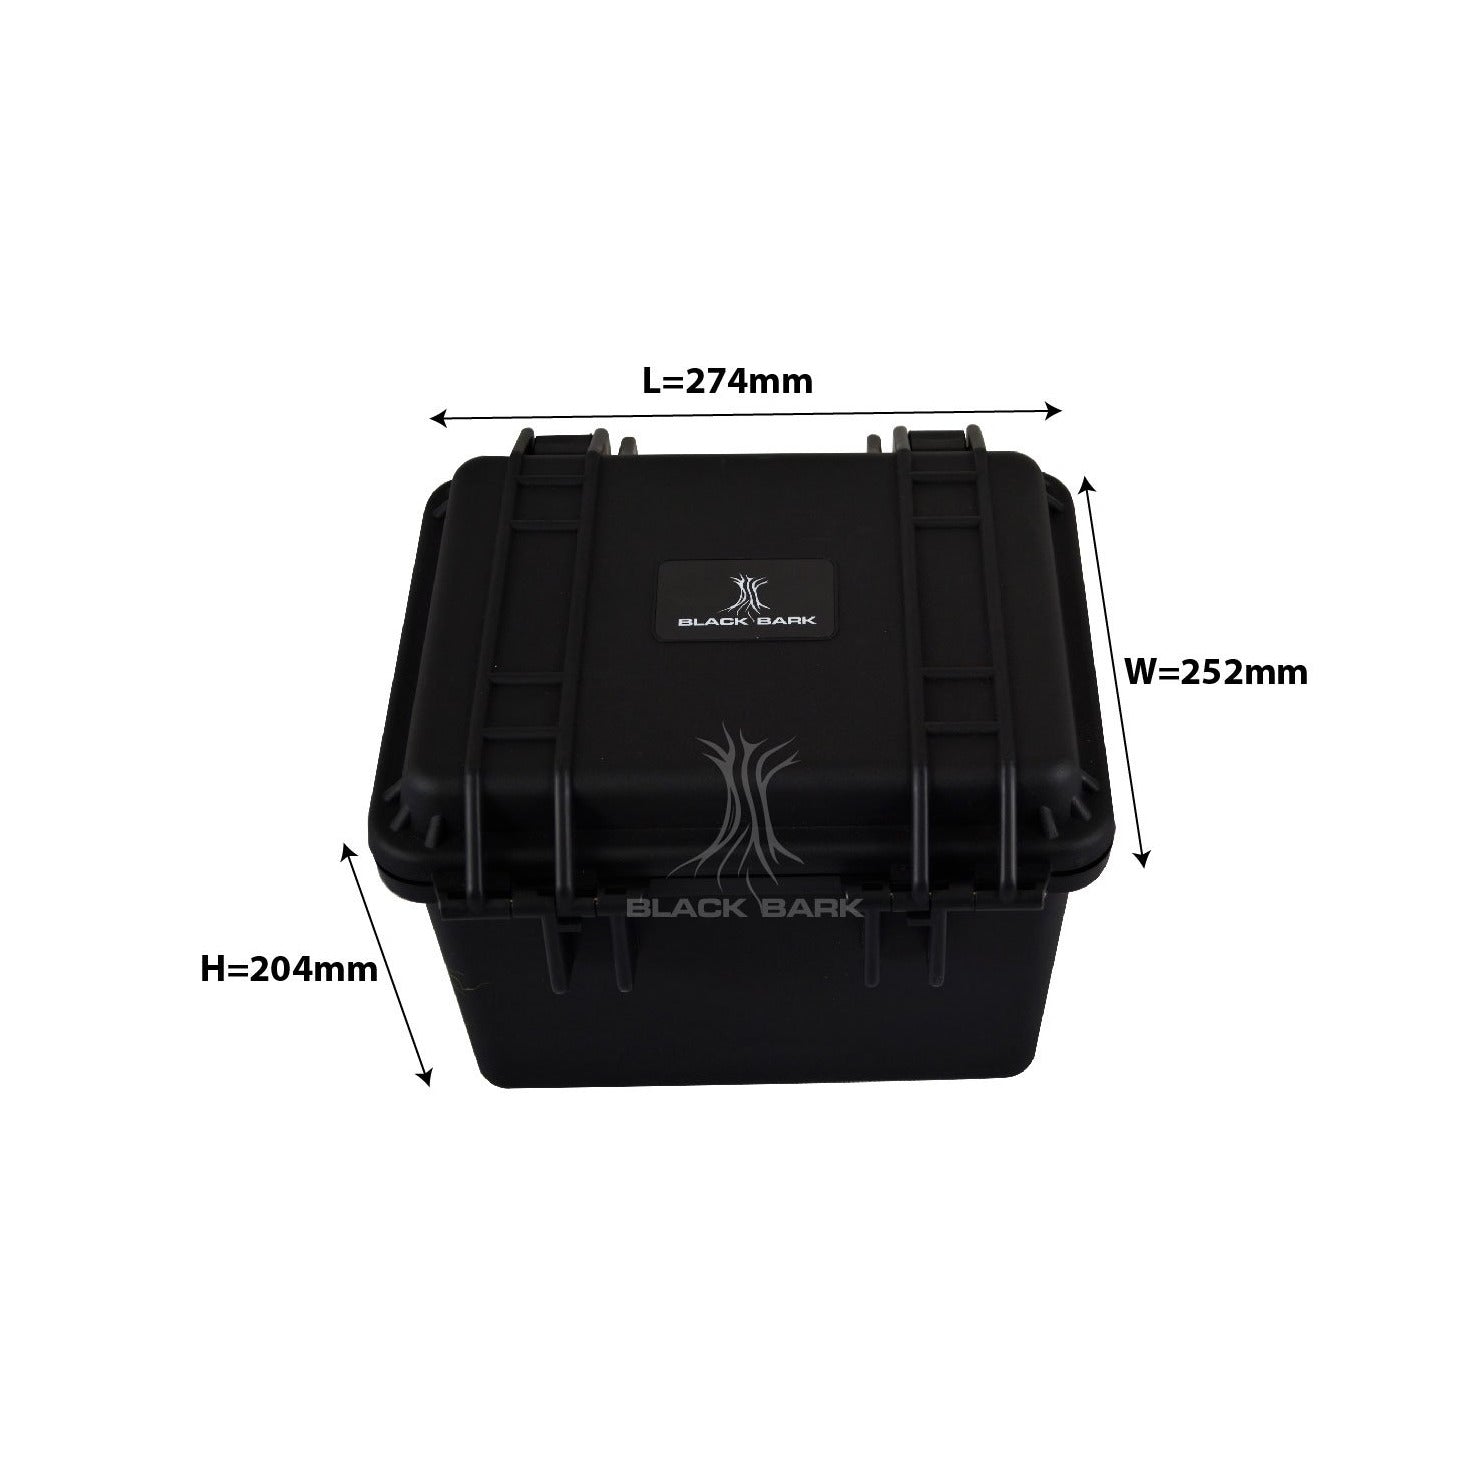 Black Bark Compact Series black BB0838 ; Camera case ; dustproof ; shockproof storage with foam ; waterproof hard carry